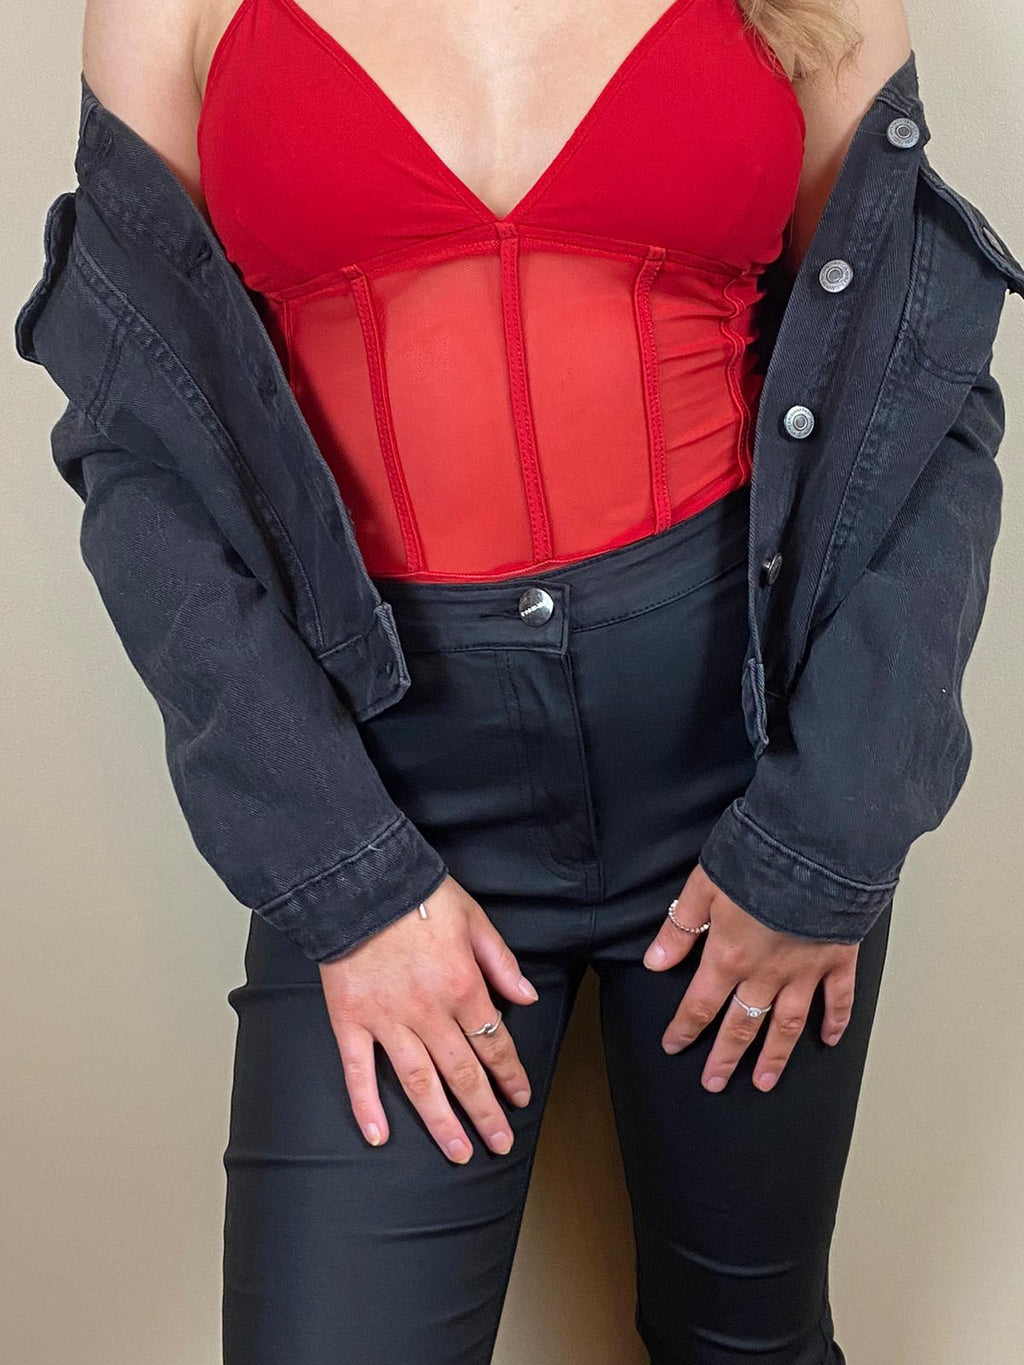 Red Panel Bodysuit | Uniquely Sophia's